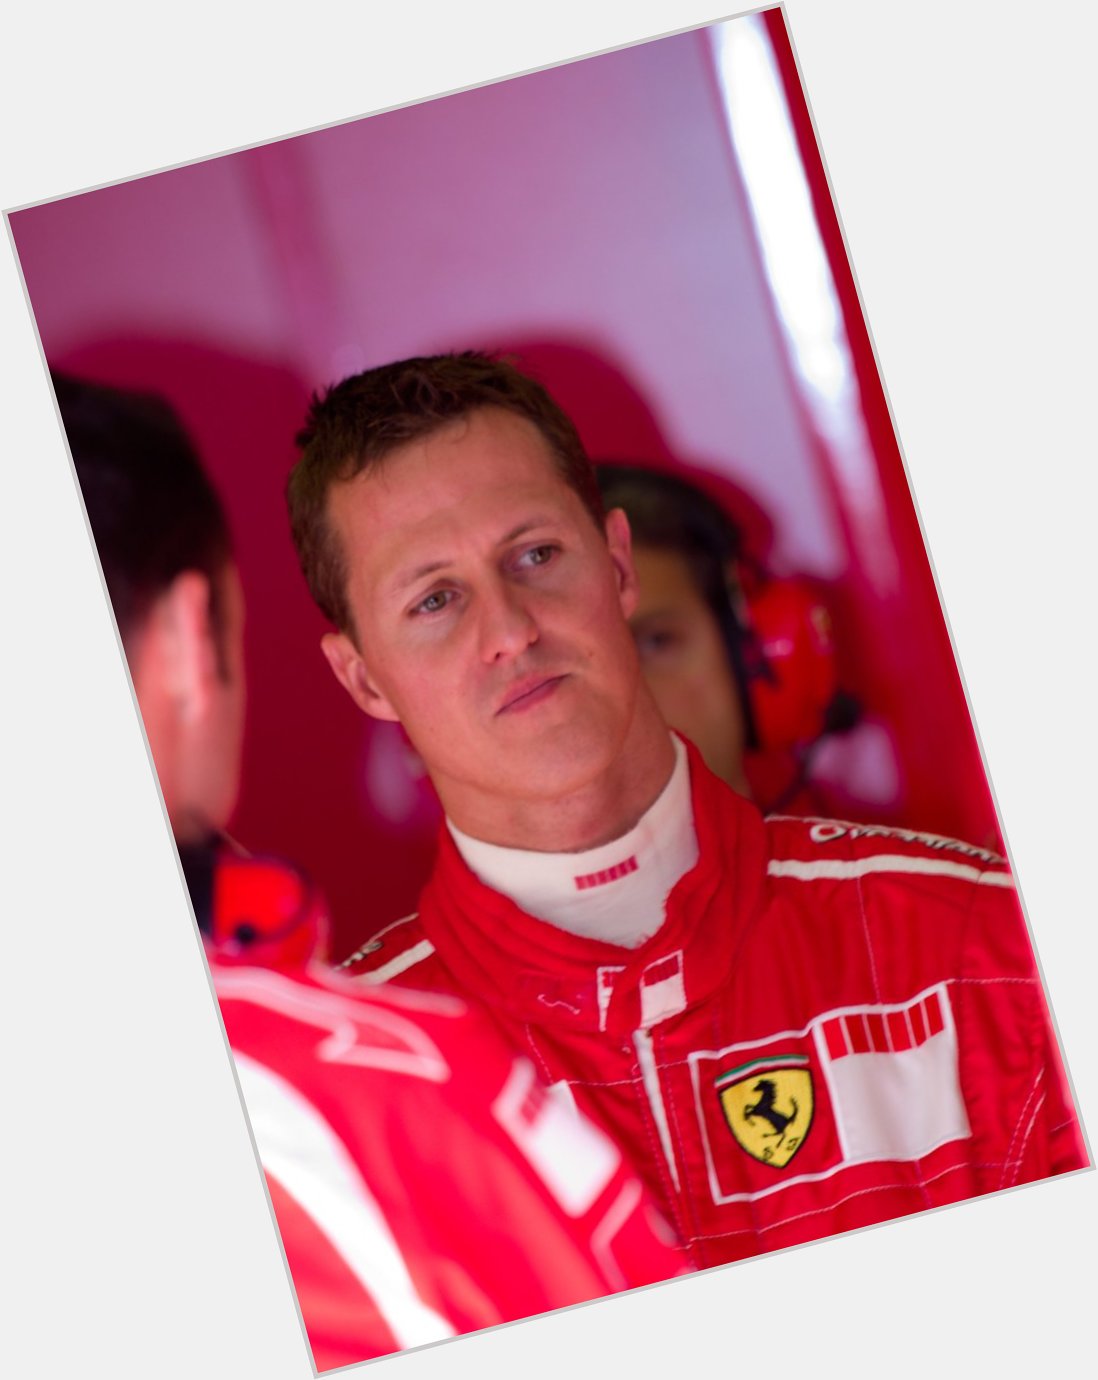 Happy birthday to the 7-time World champion Michael Schumacher! Keep fighting, champ. 